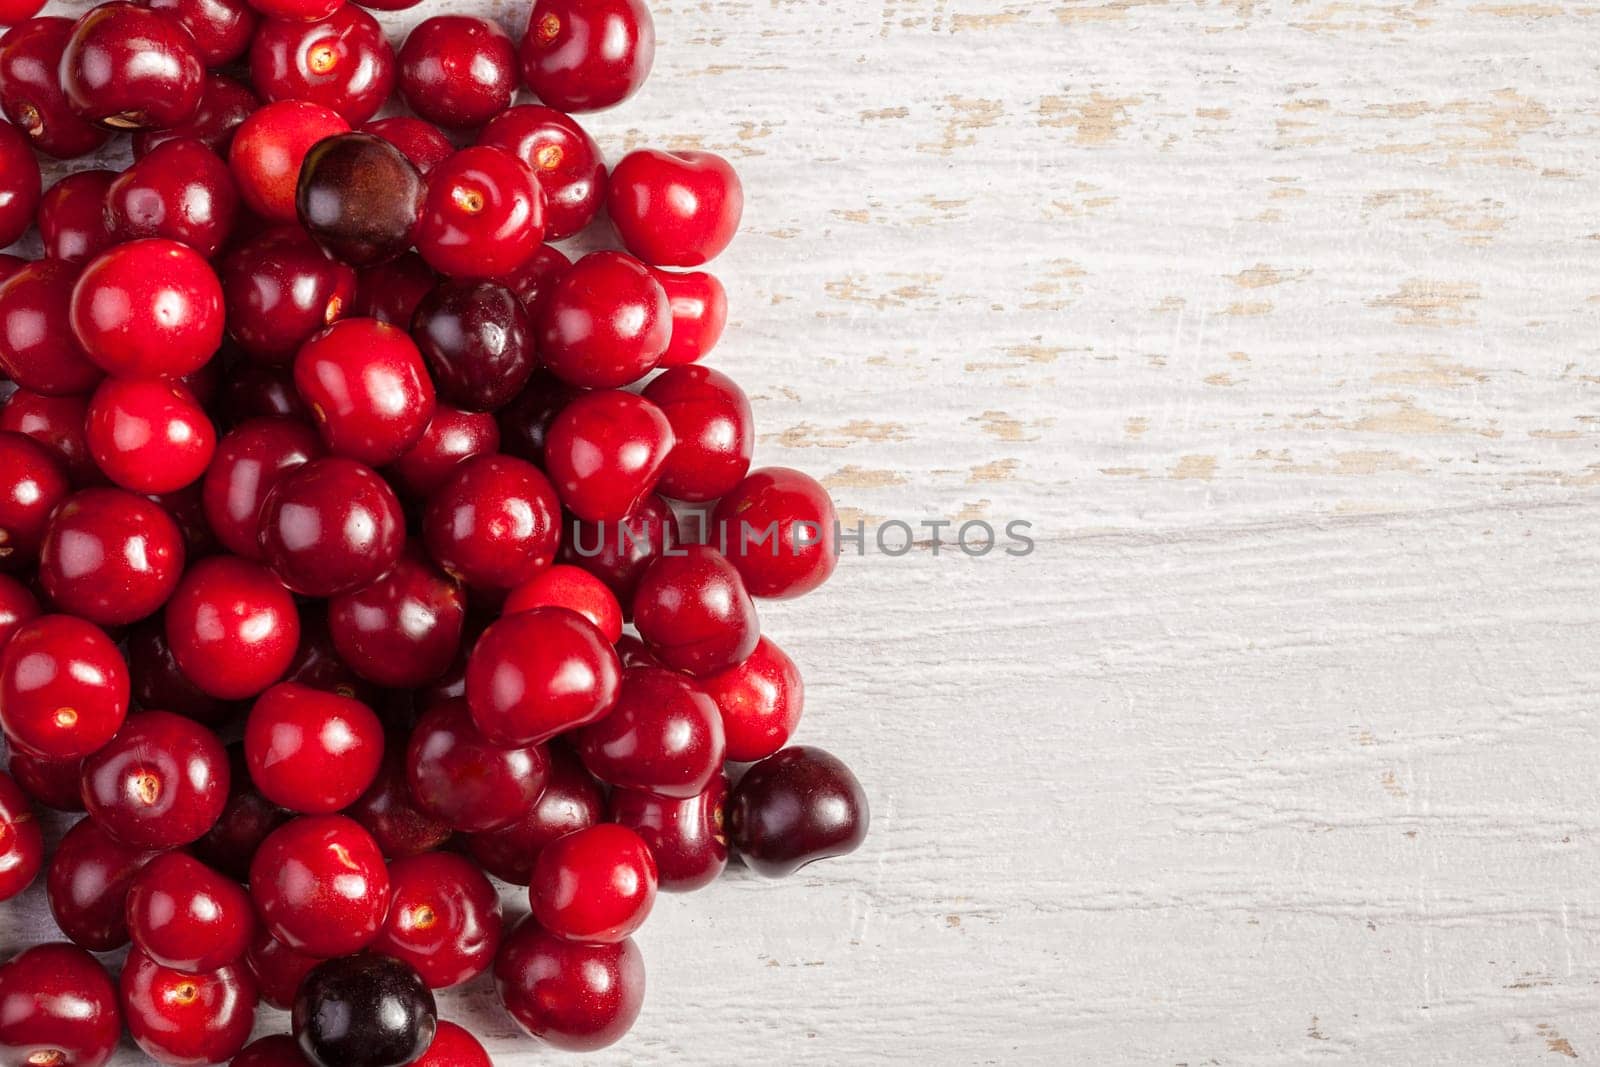 Juicy fresh cherry on wooden background by DCStudio